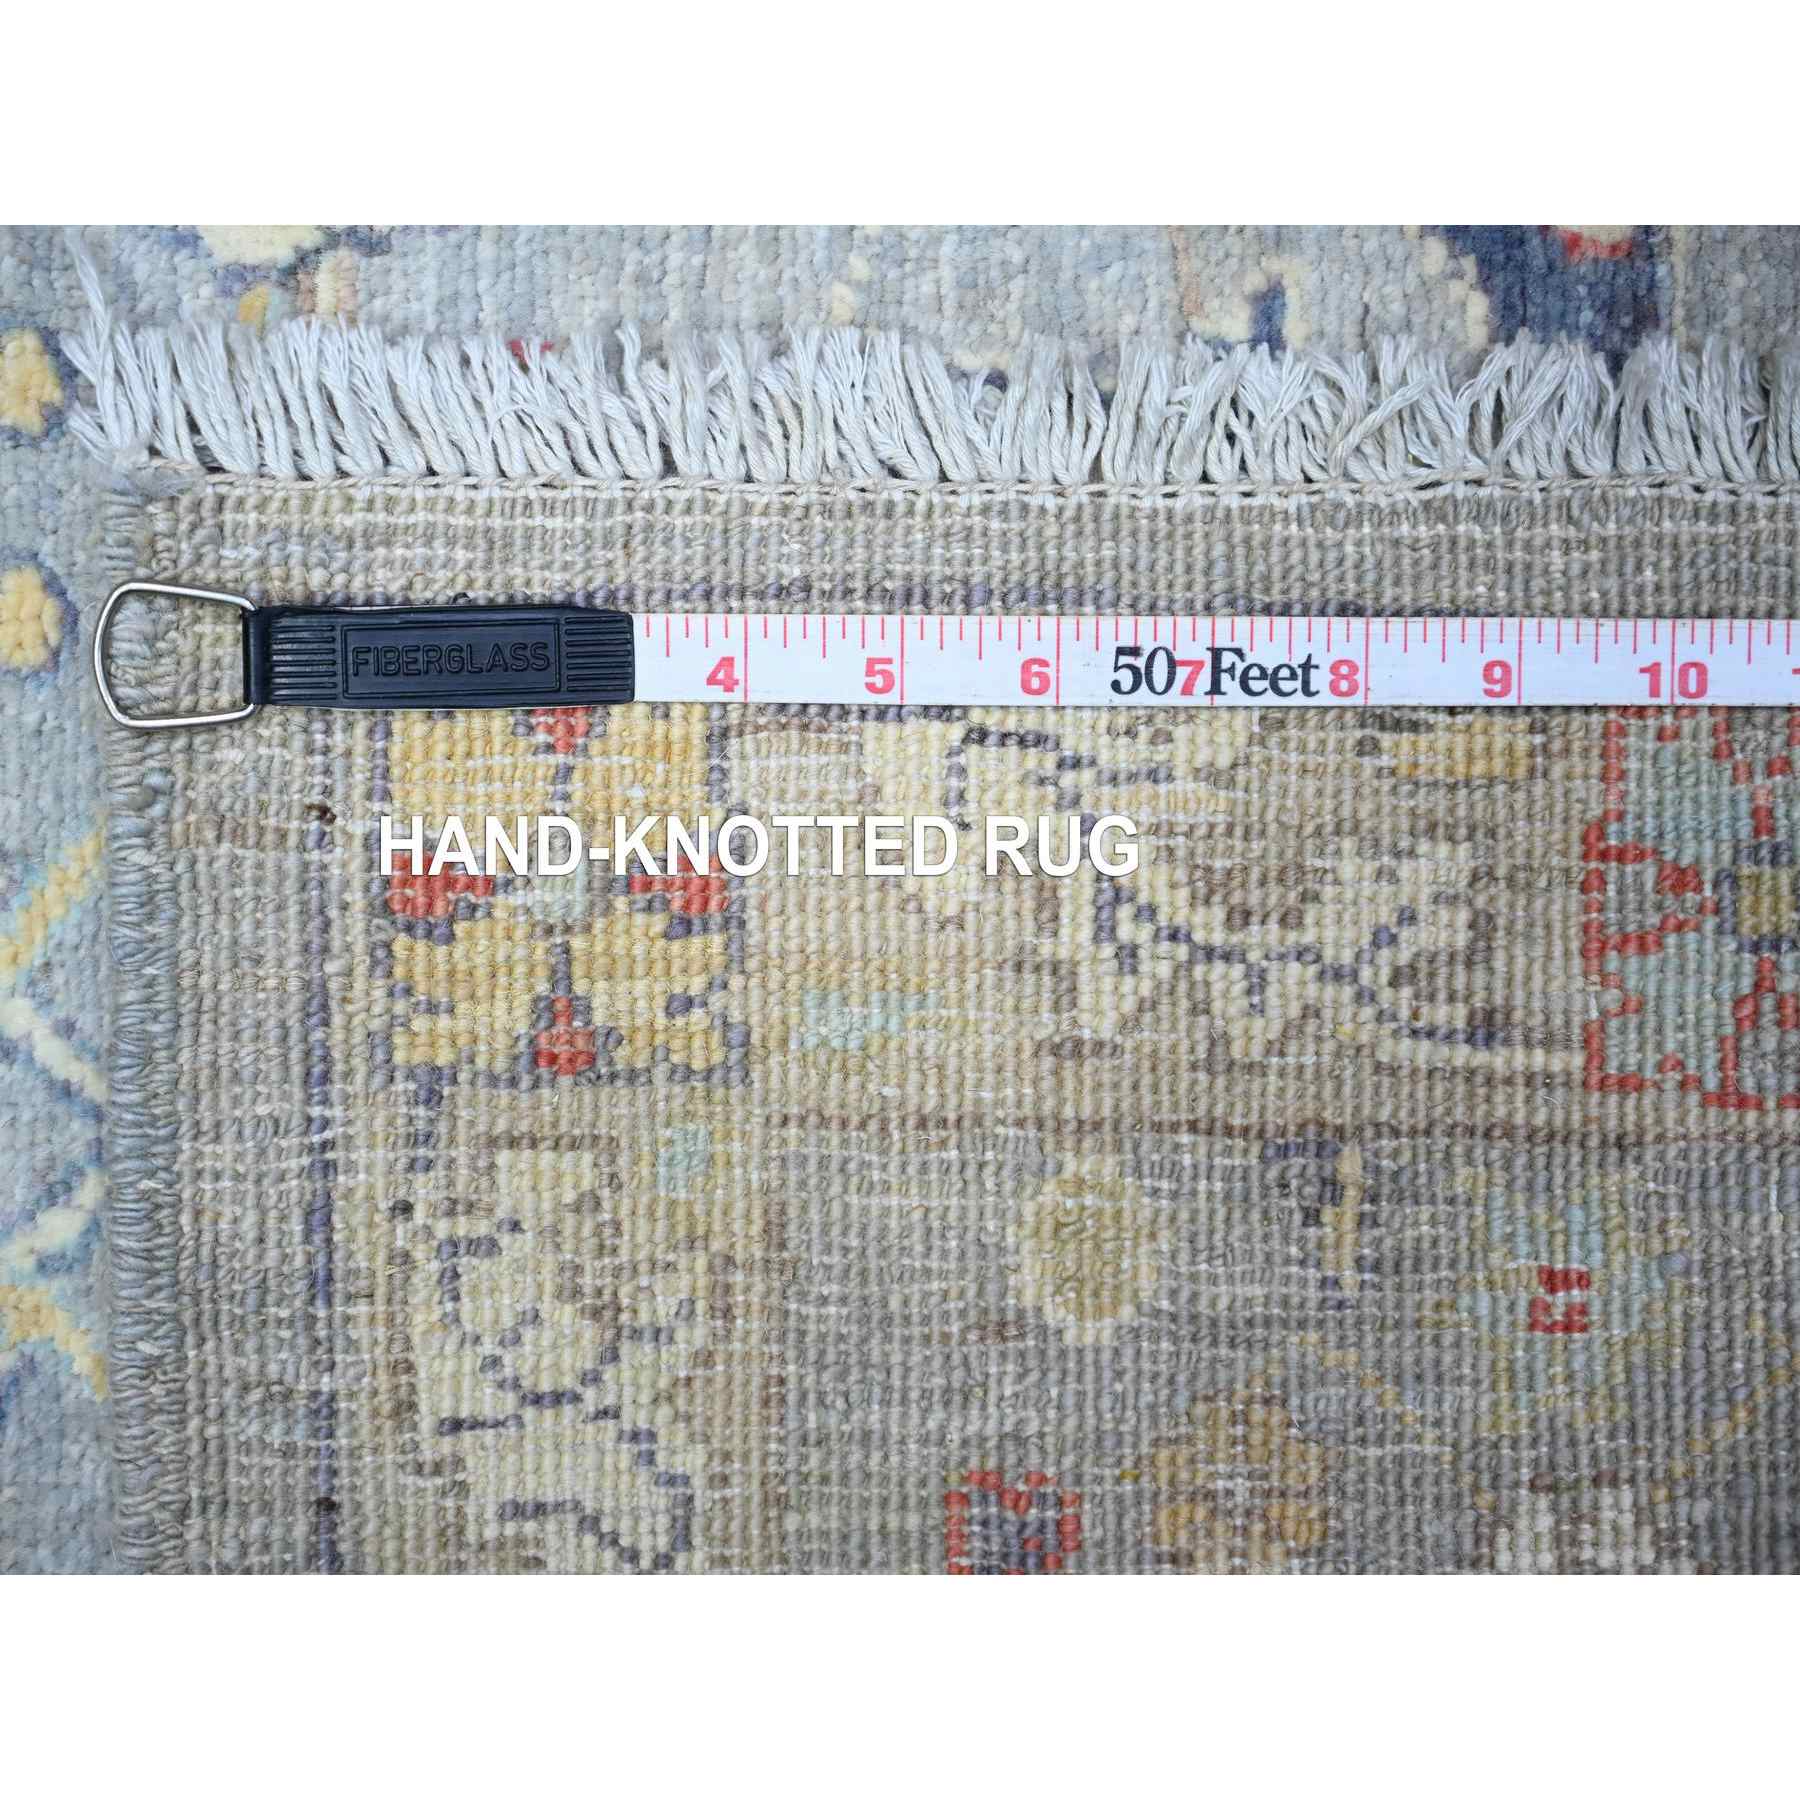 Mamluk-Hand-Knotted-Rug-442470